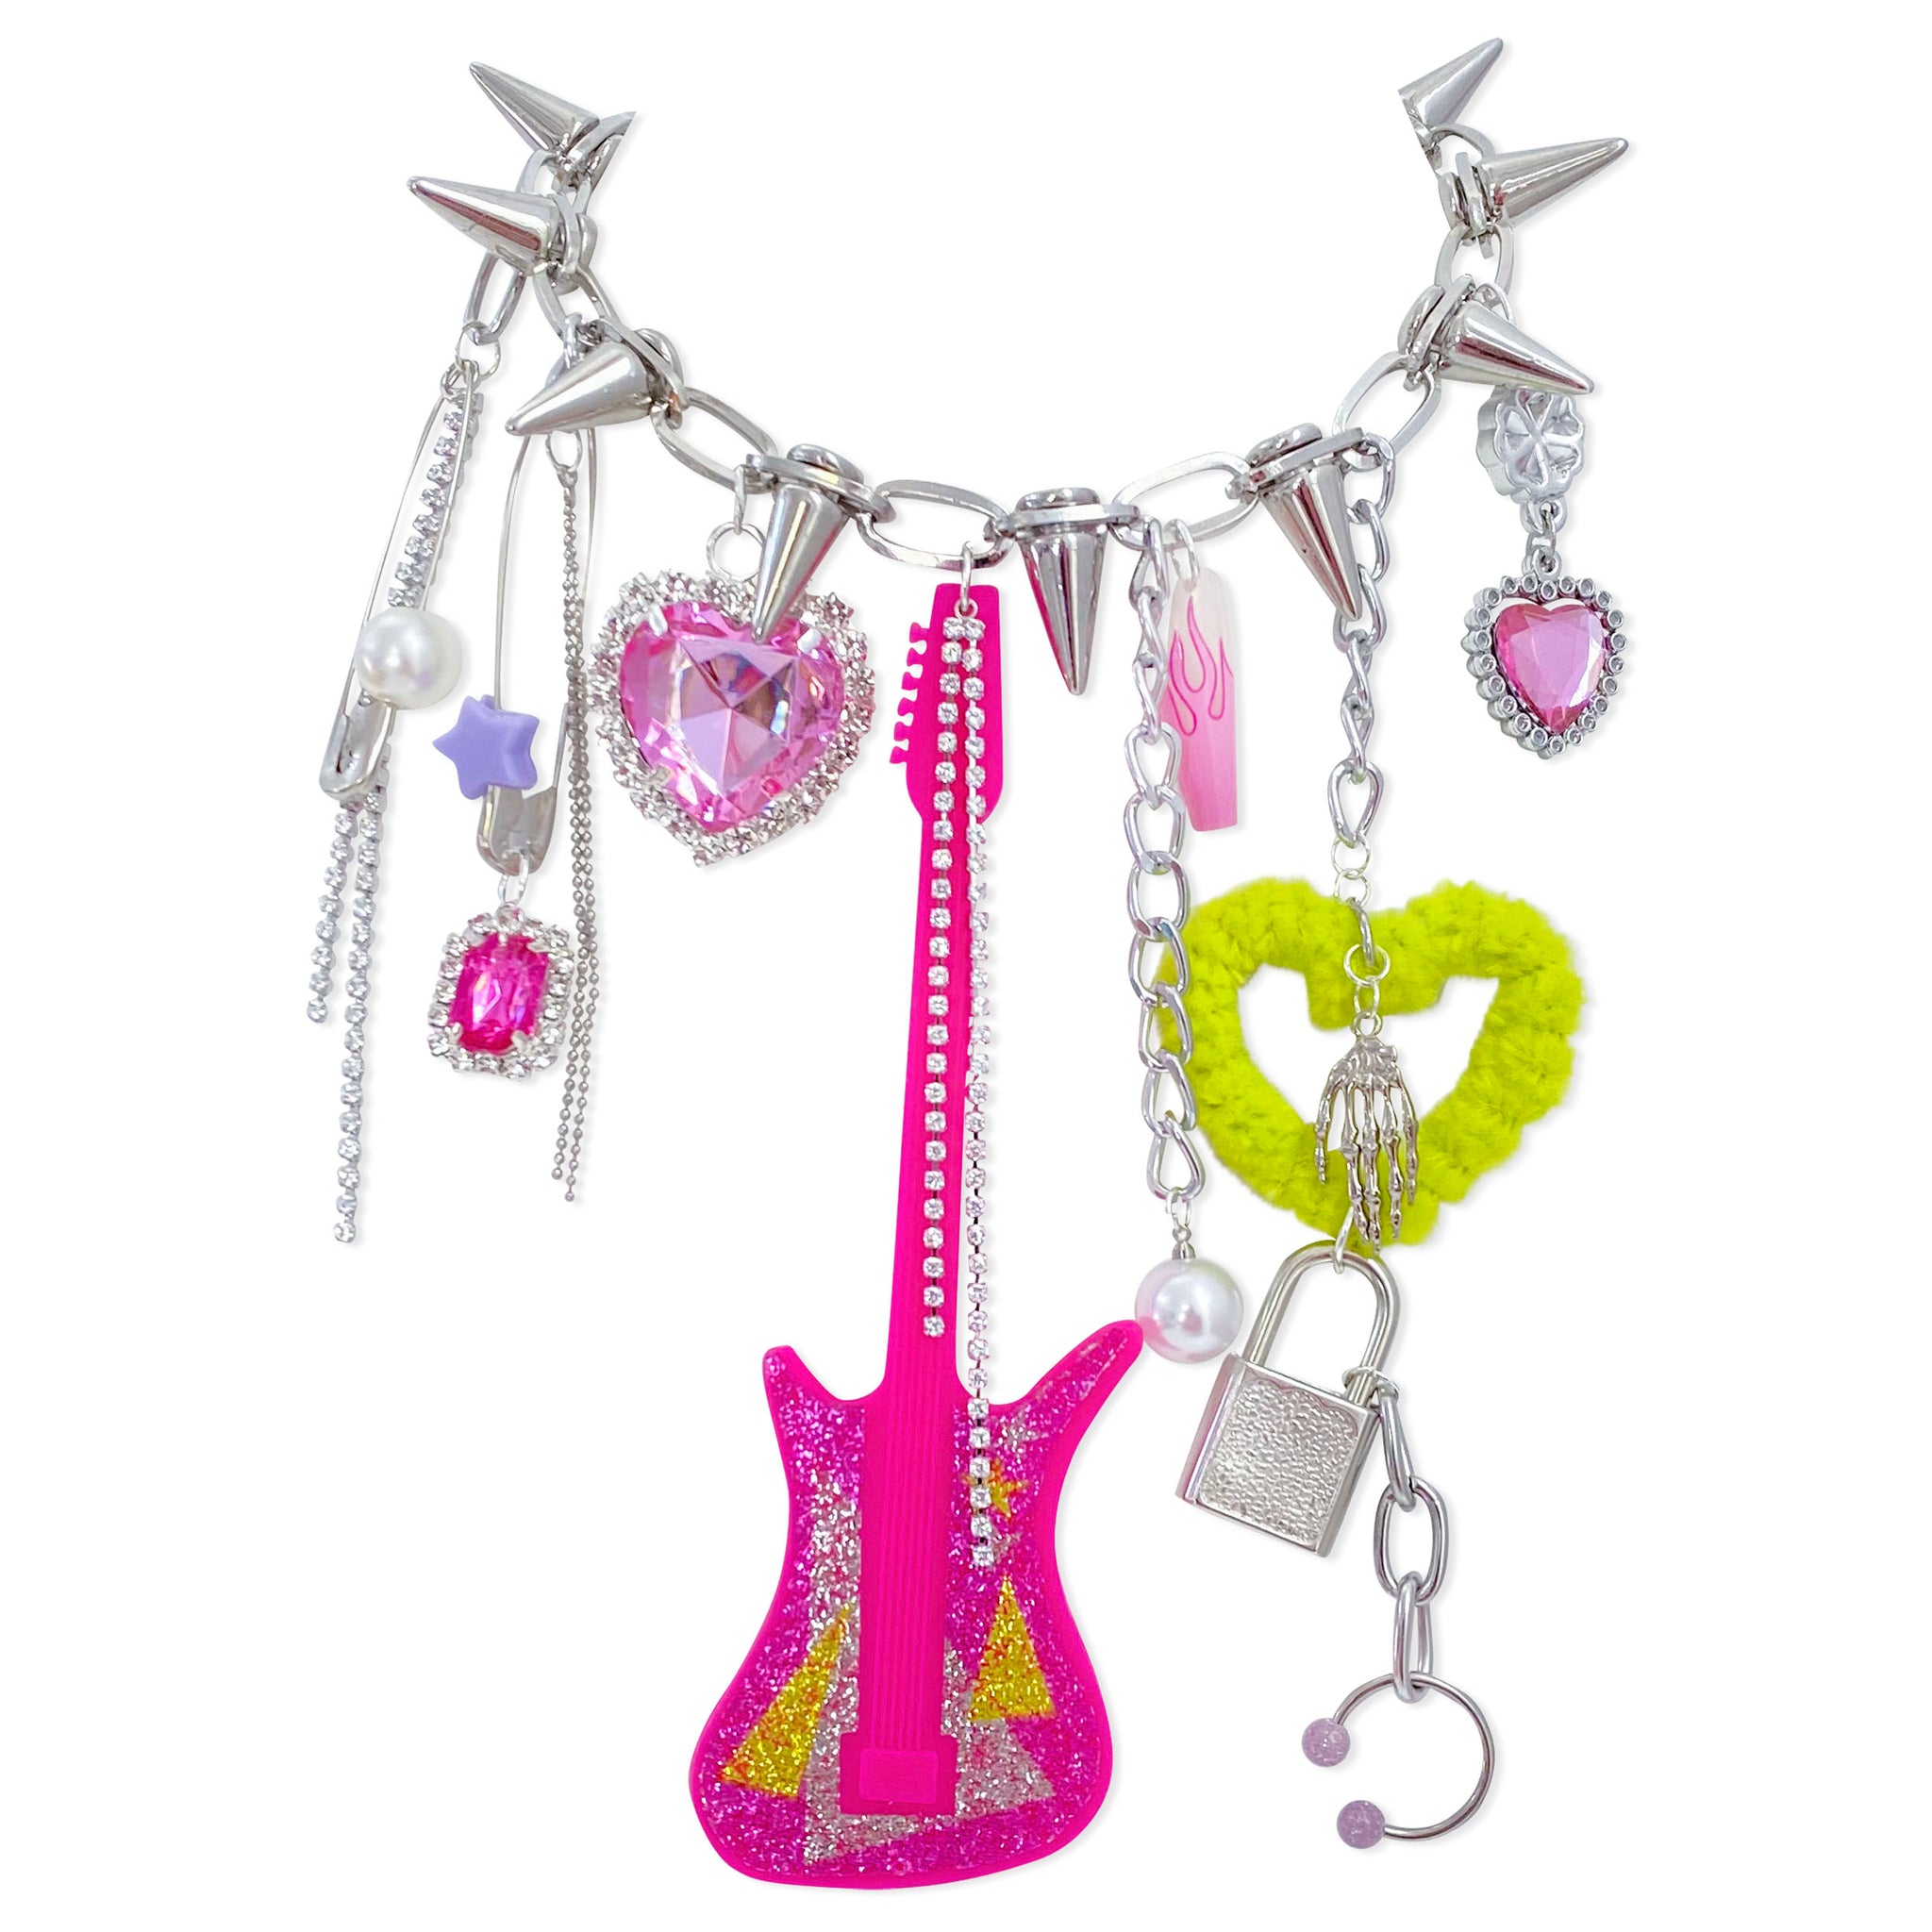 Rockstar Barbie Punk Charm Necklace